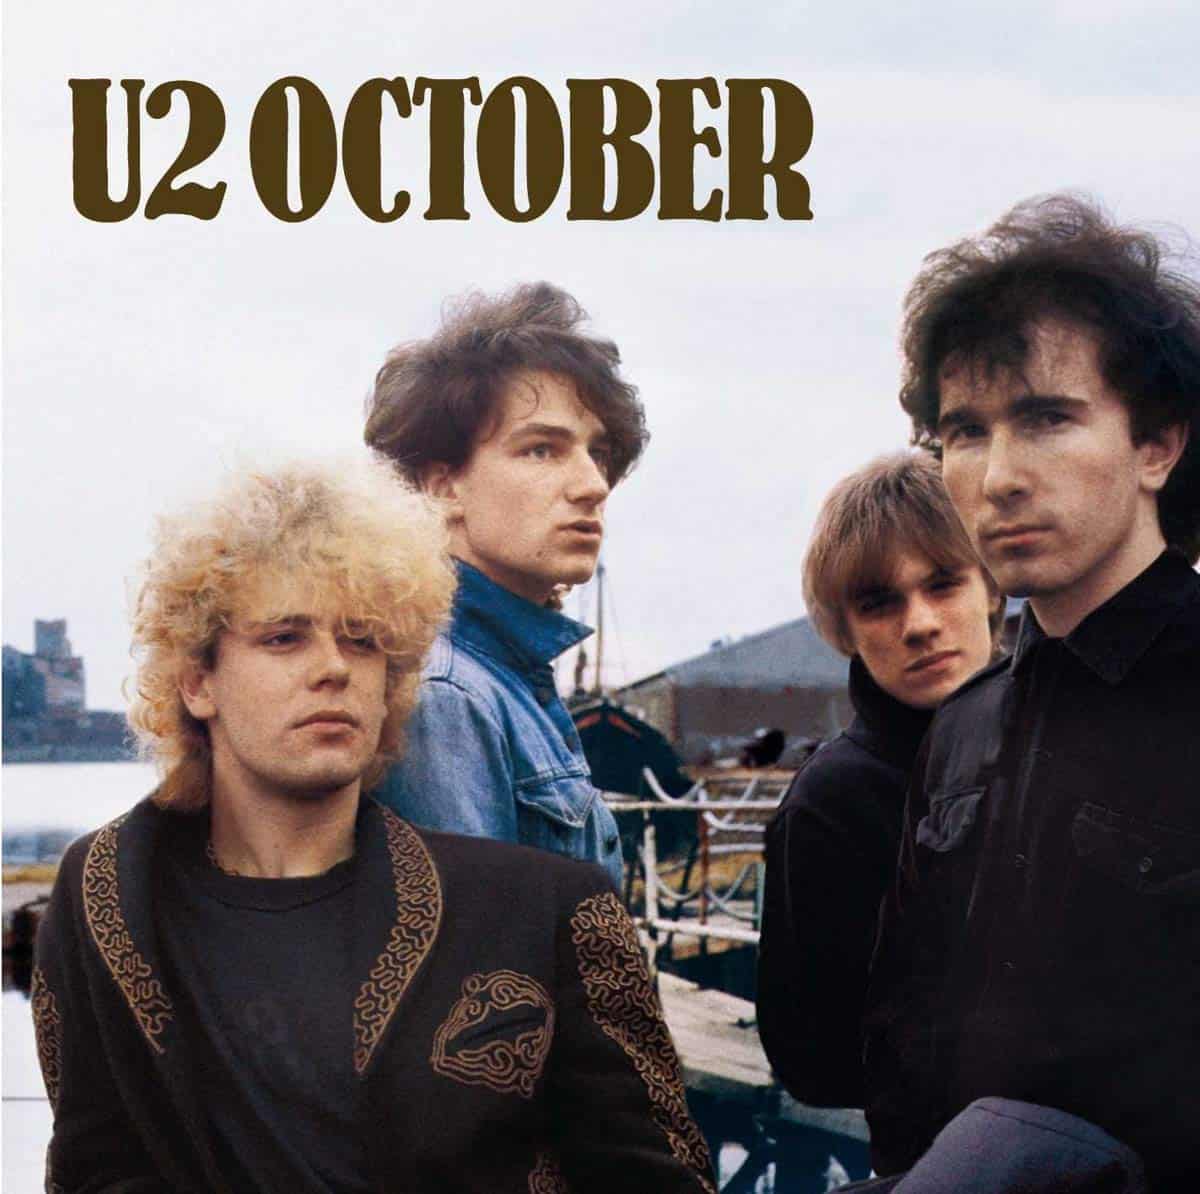 U2 October vinyl record